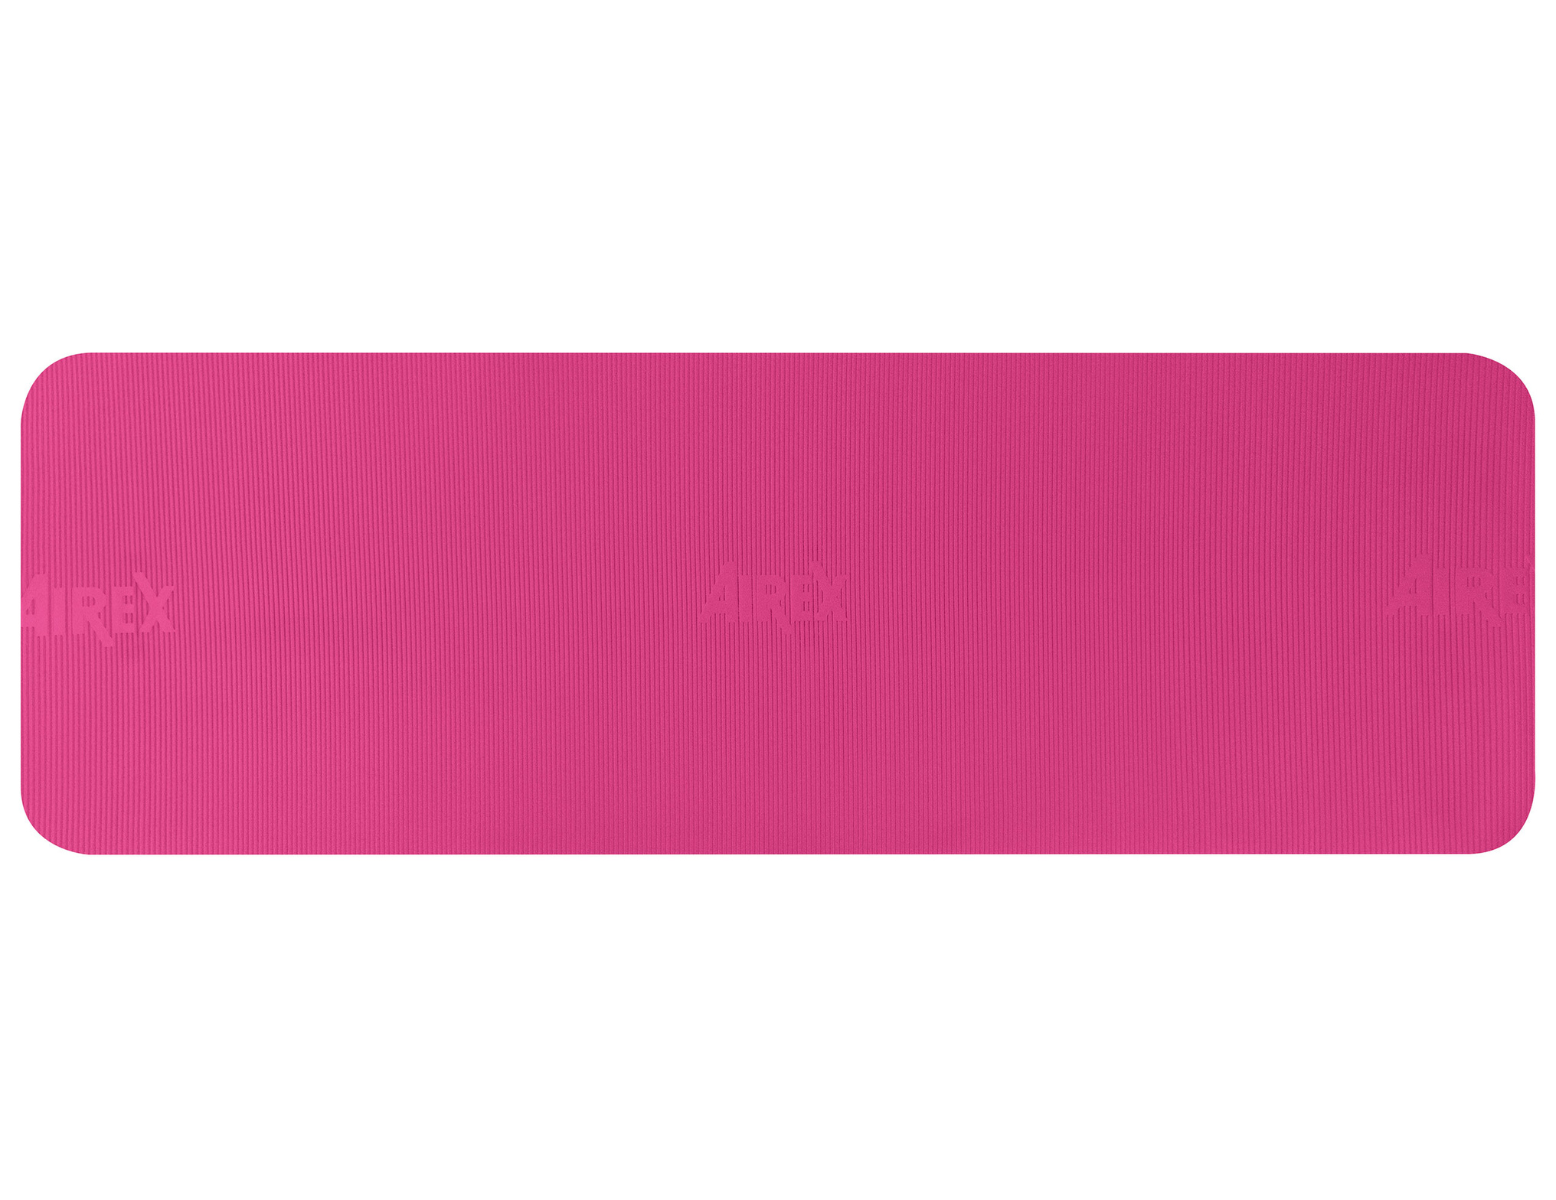 Airex tapis Fitline - 180 x 60 x 1 cm - rose vif